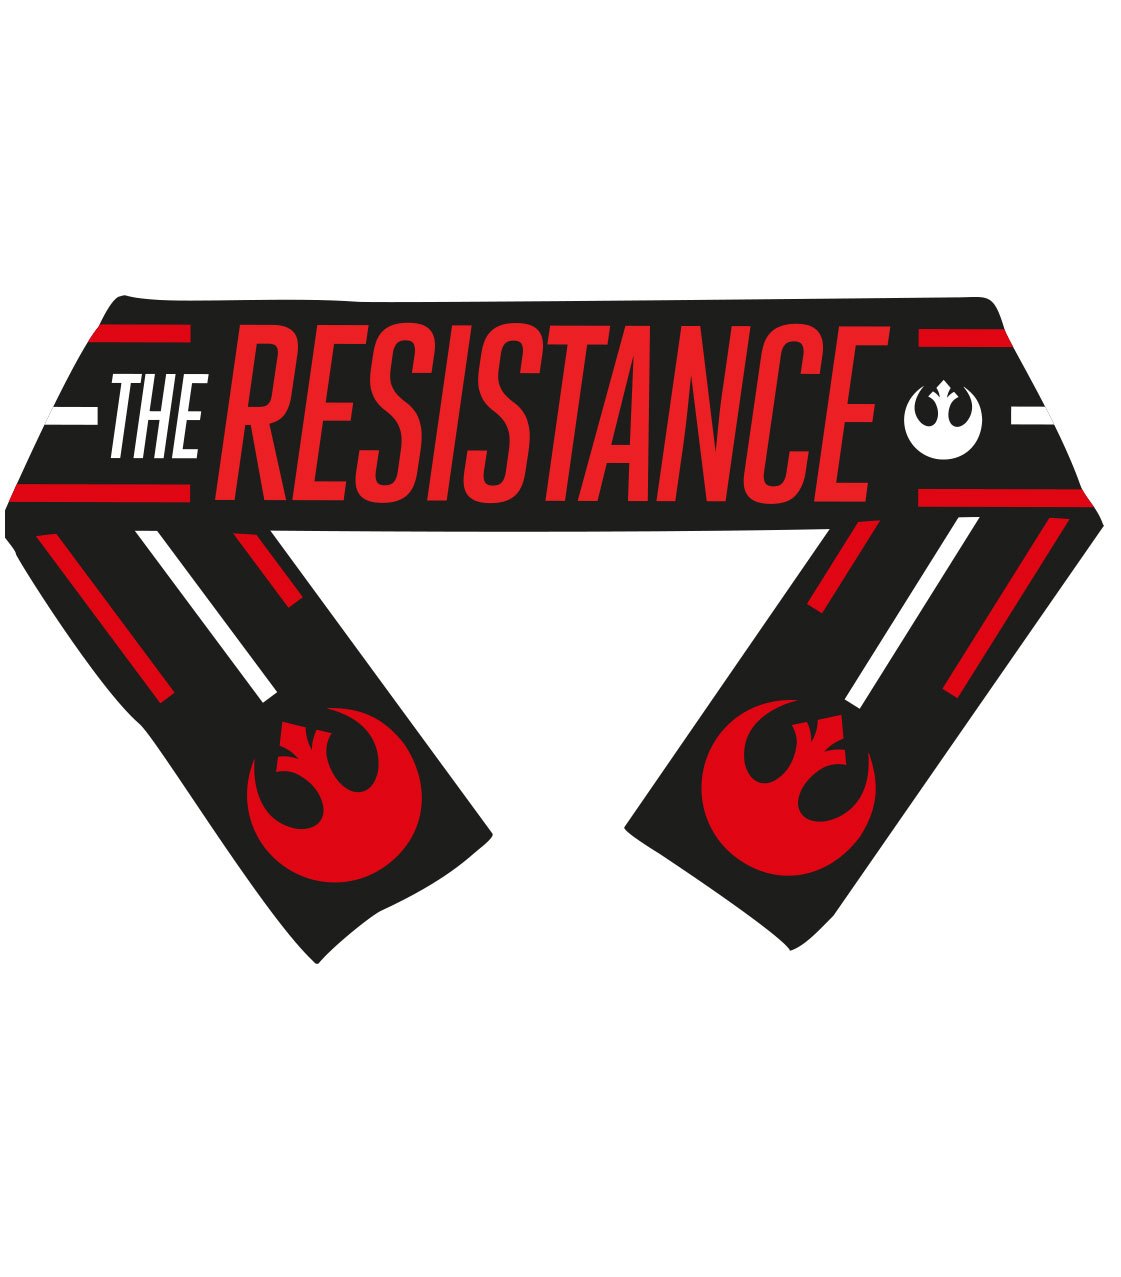 Star Wars Episode VIII charpe The Resistance